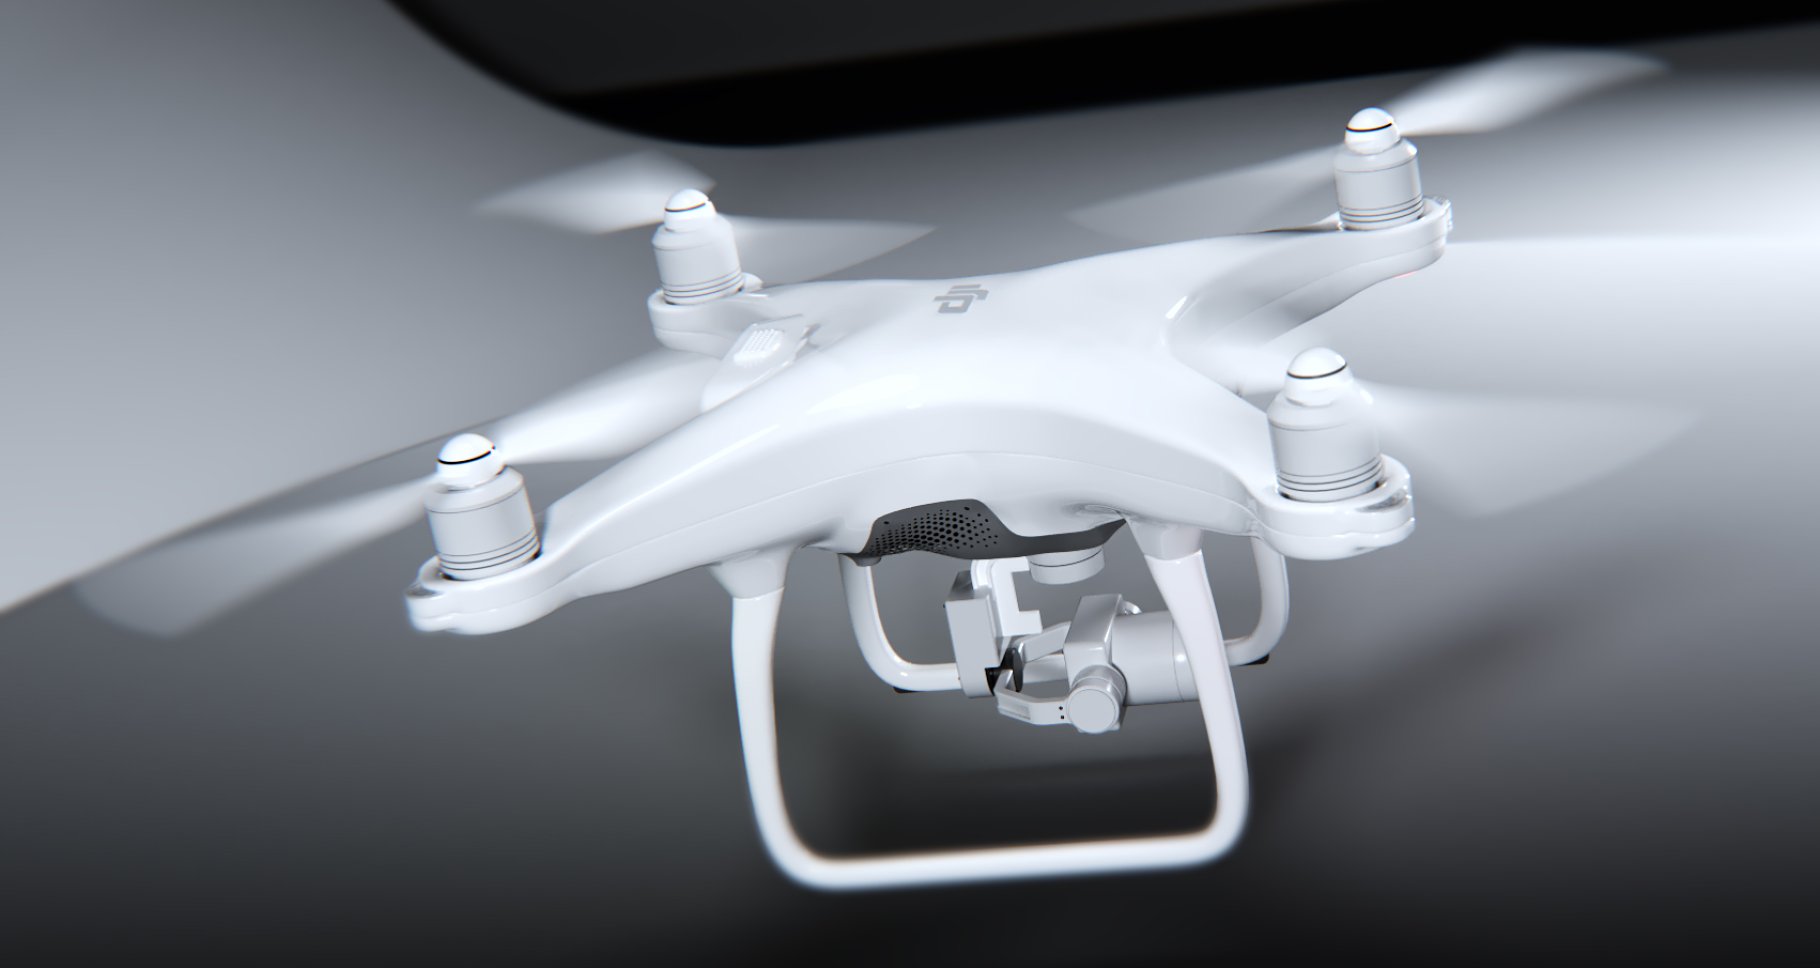 Rendering of a unique white dji phantom 4 drone 3d model